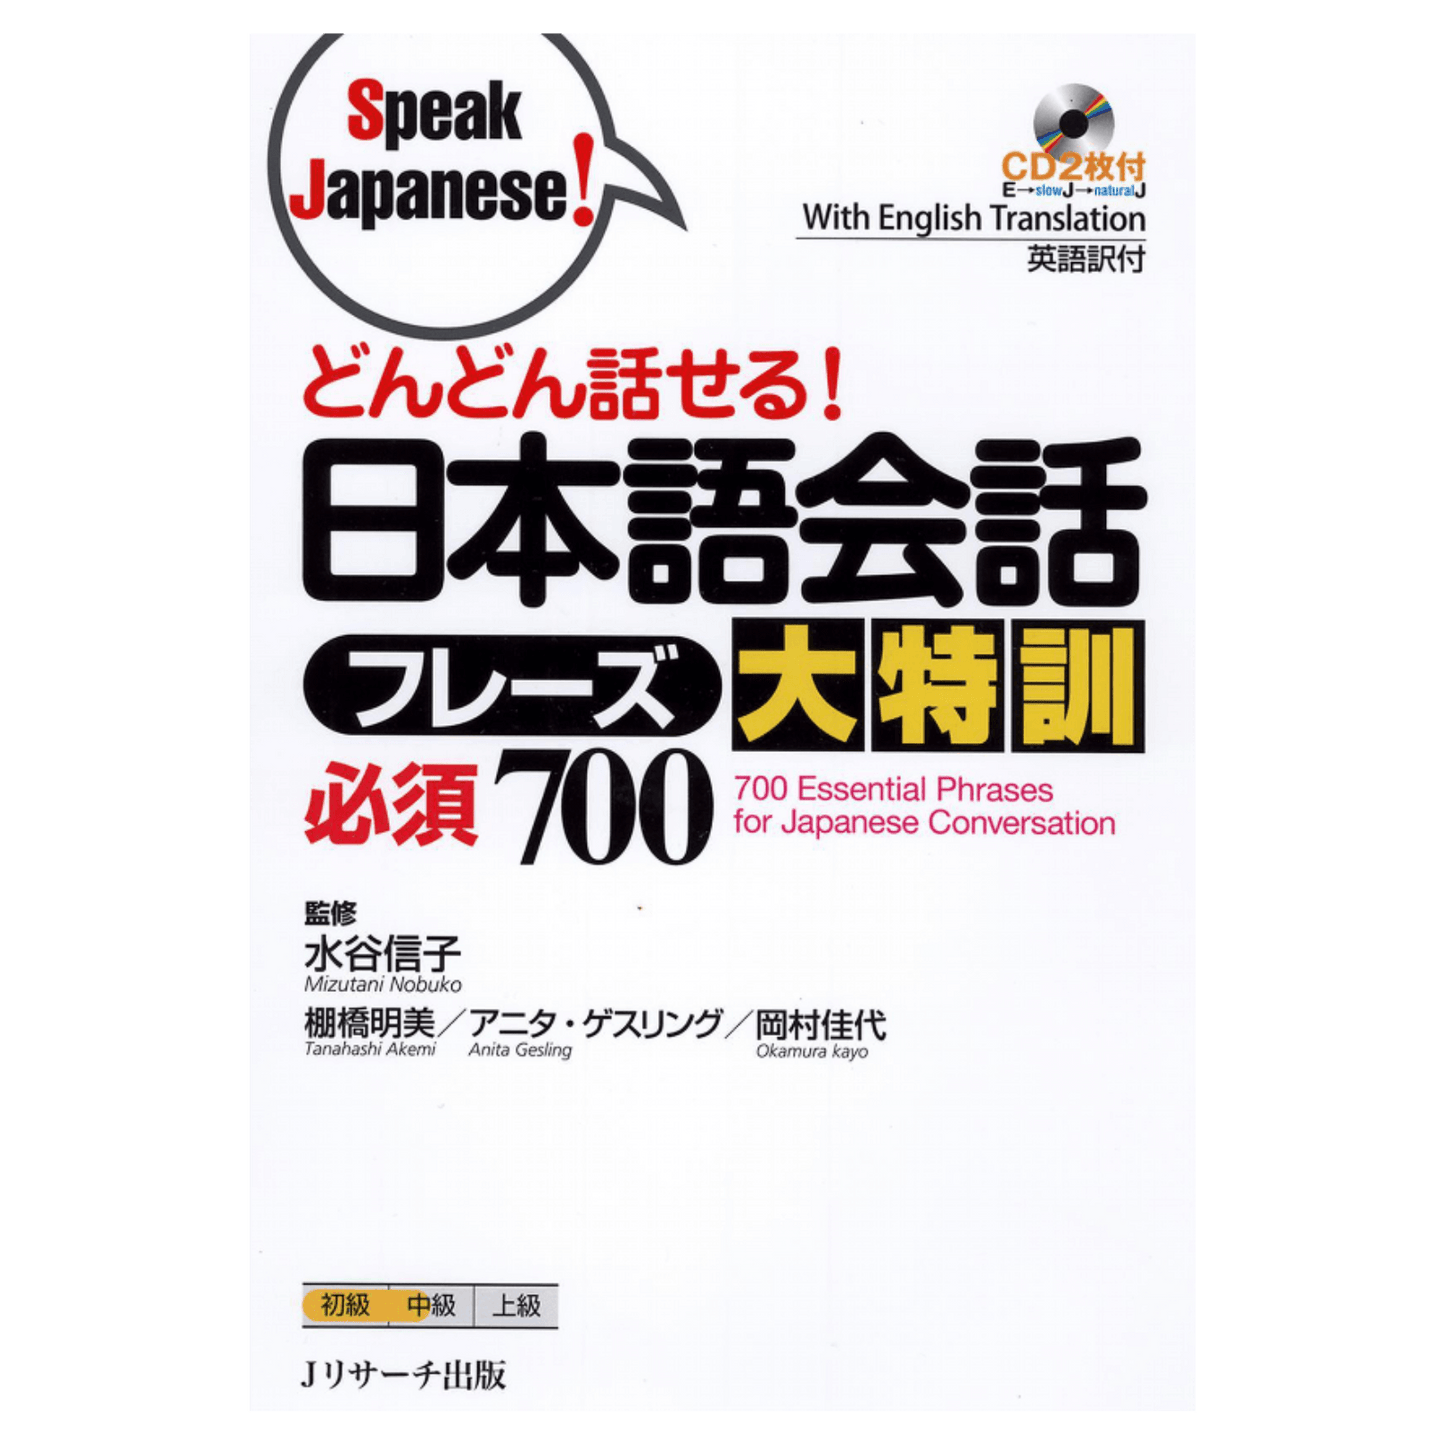 Japans handboek | Spreek Japans! -どんどん話せる! ChitoroShop